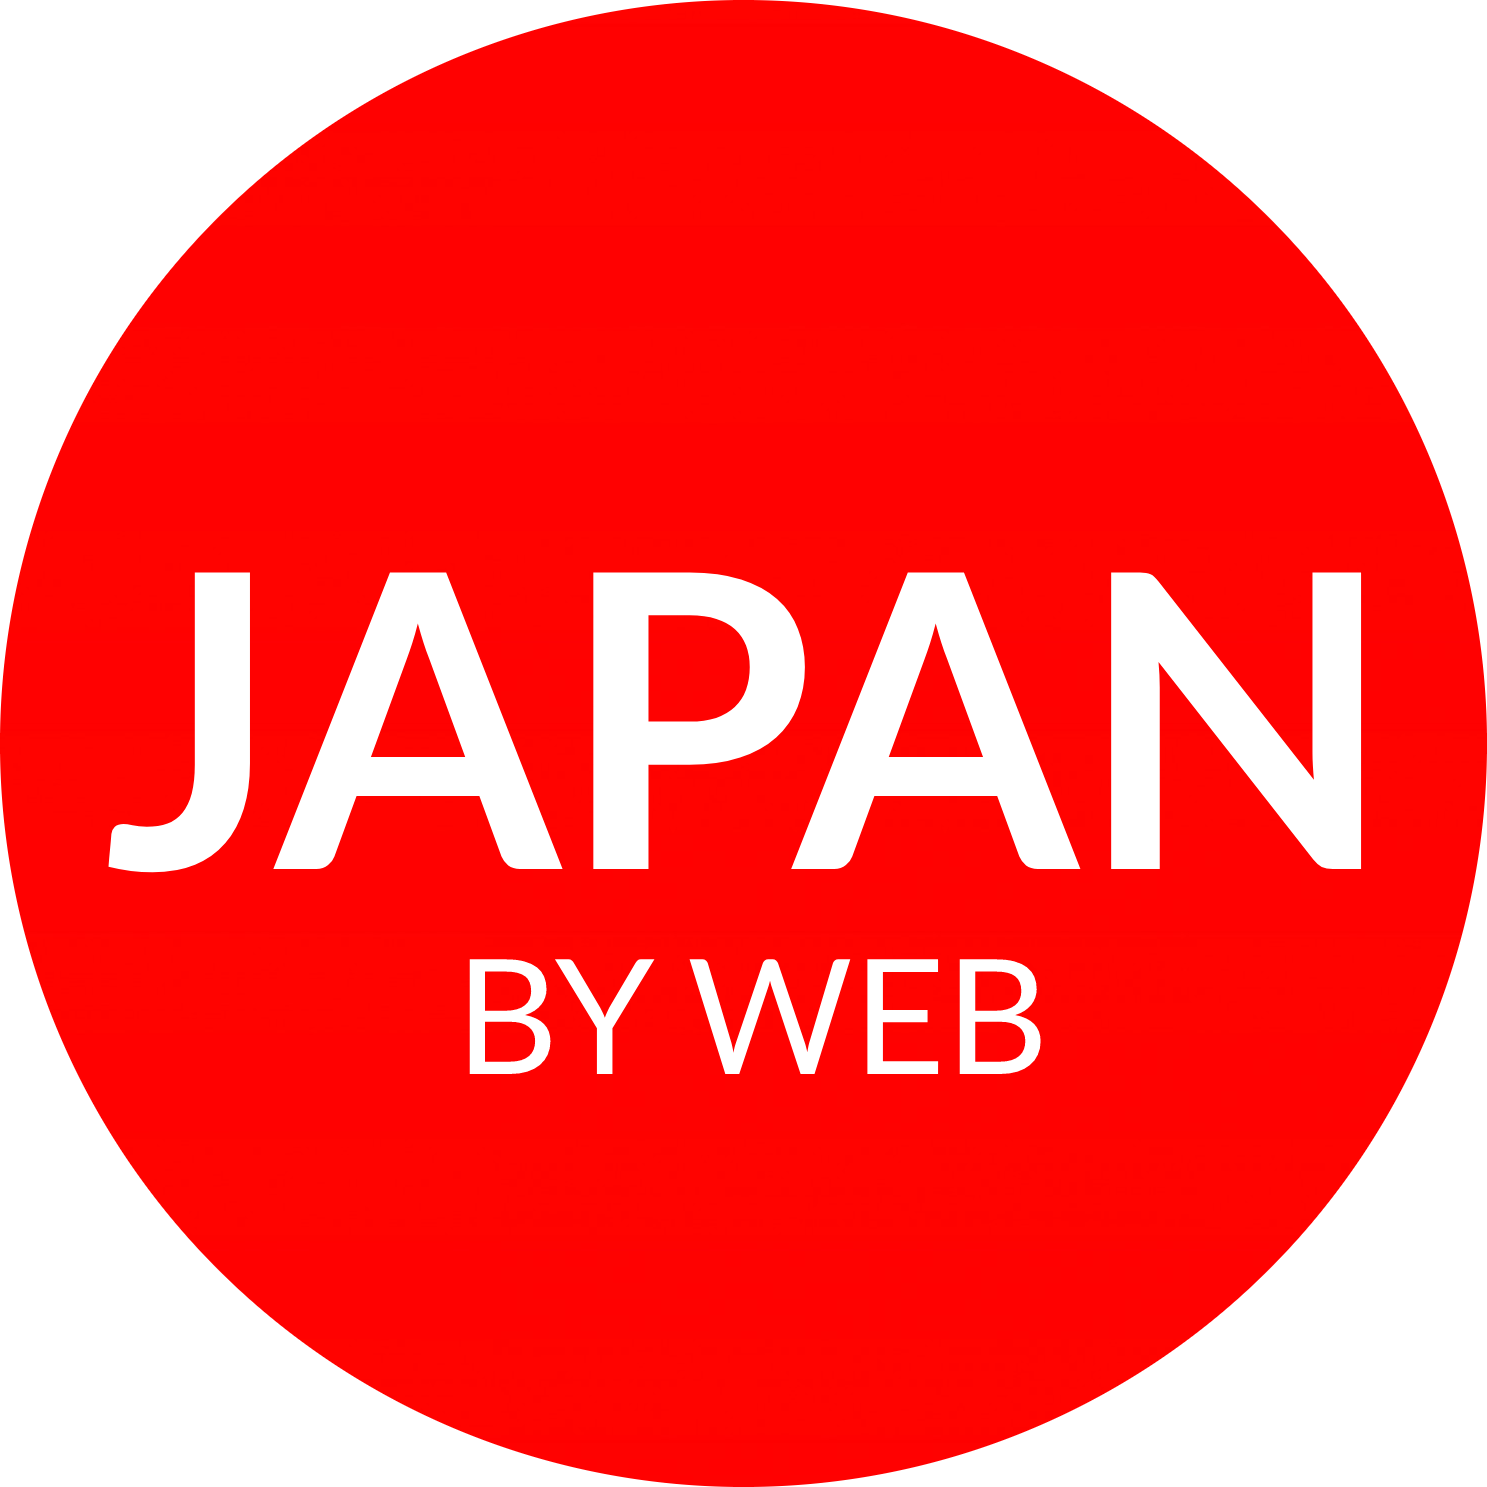 Japan by web